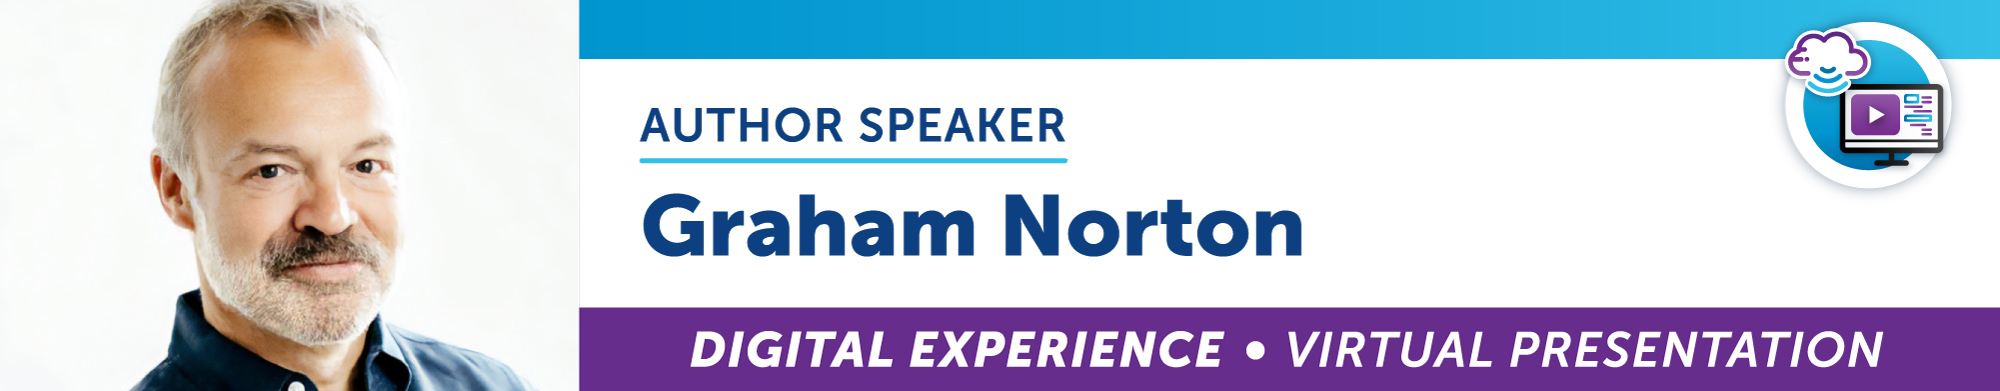 Digital Experience Speaker Graham Norton